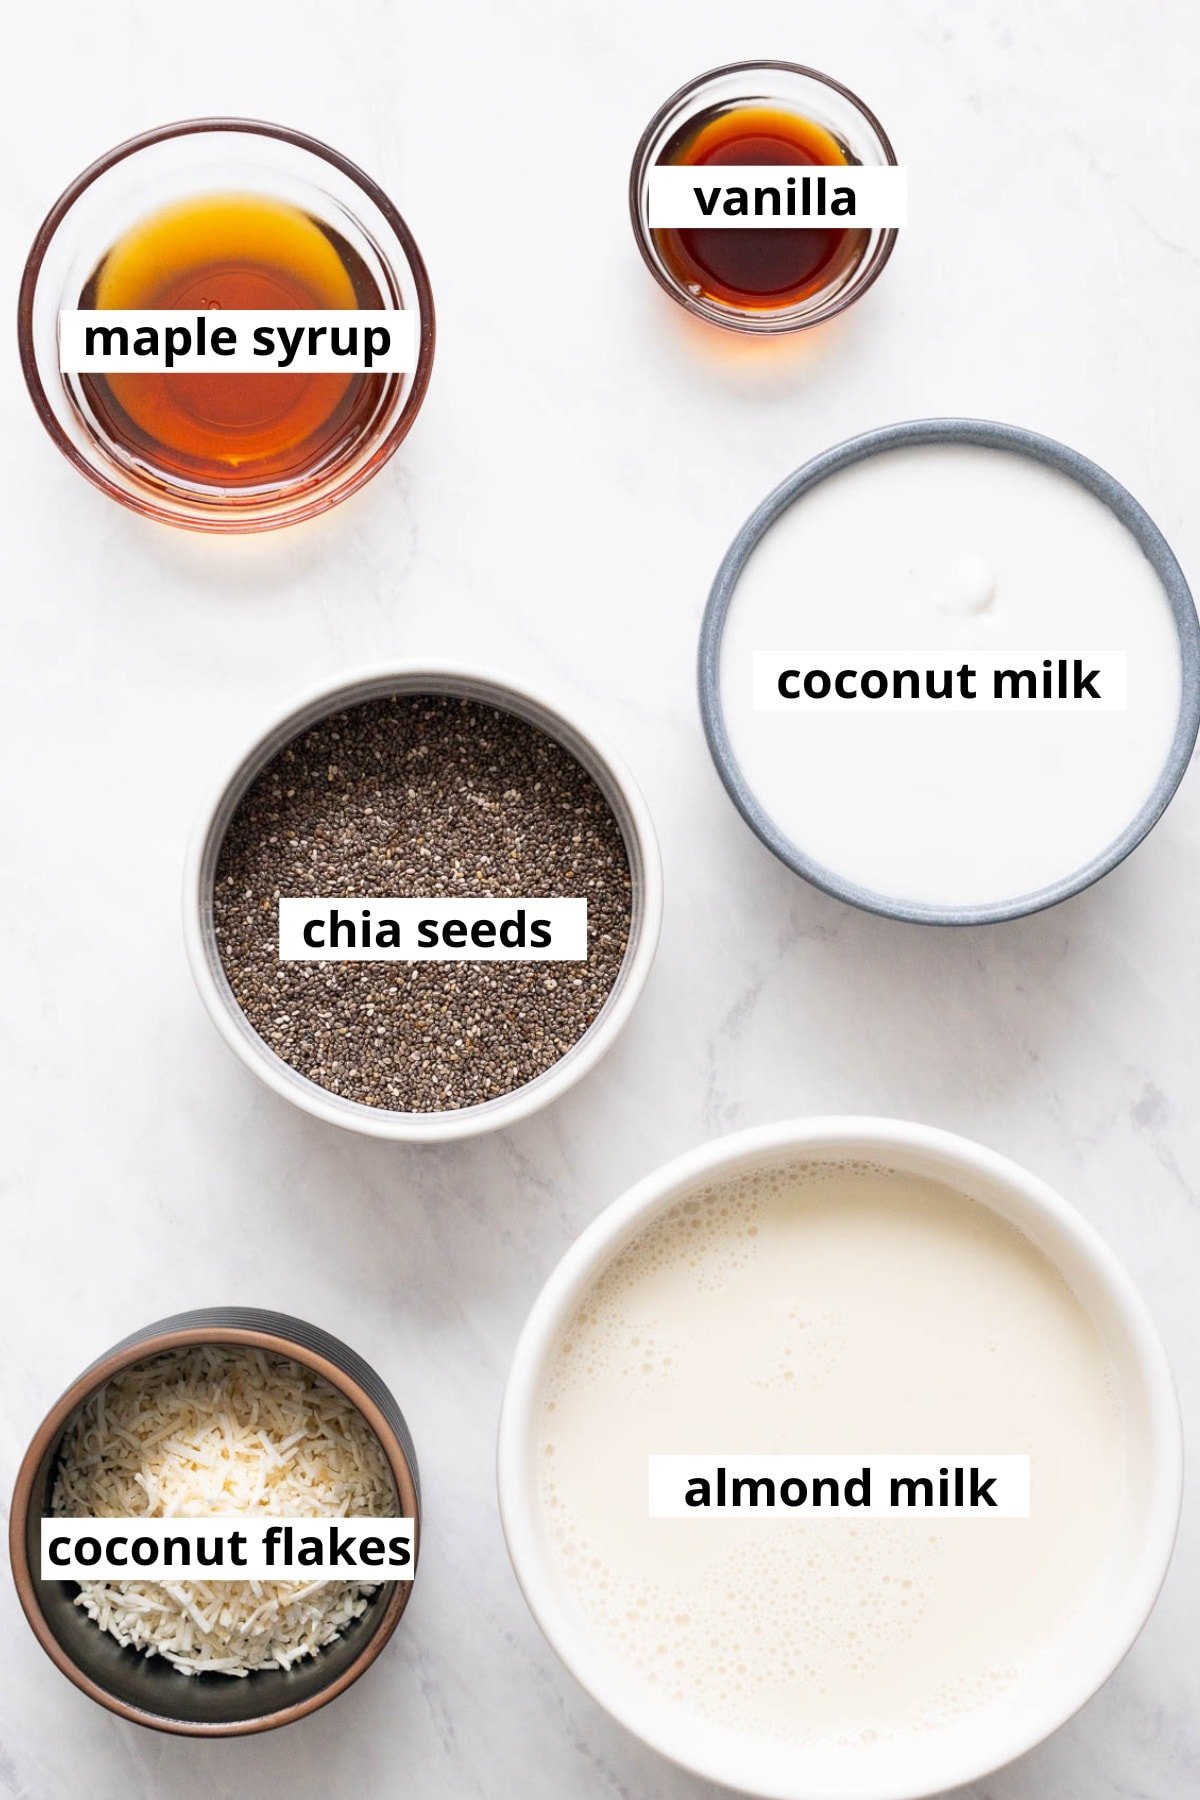 Almond milk, coconut flakes, coconut milk, chia seeds, maple syrup, vanilla.